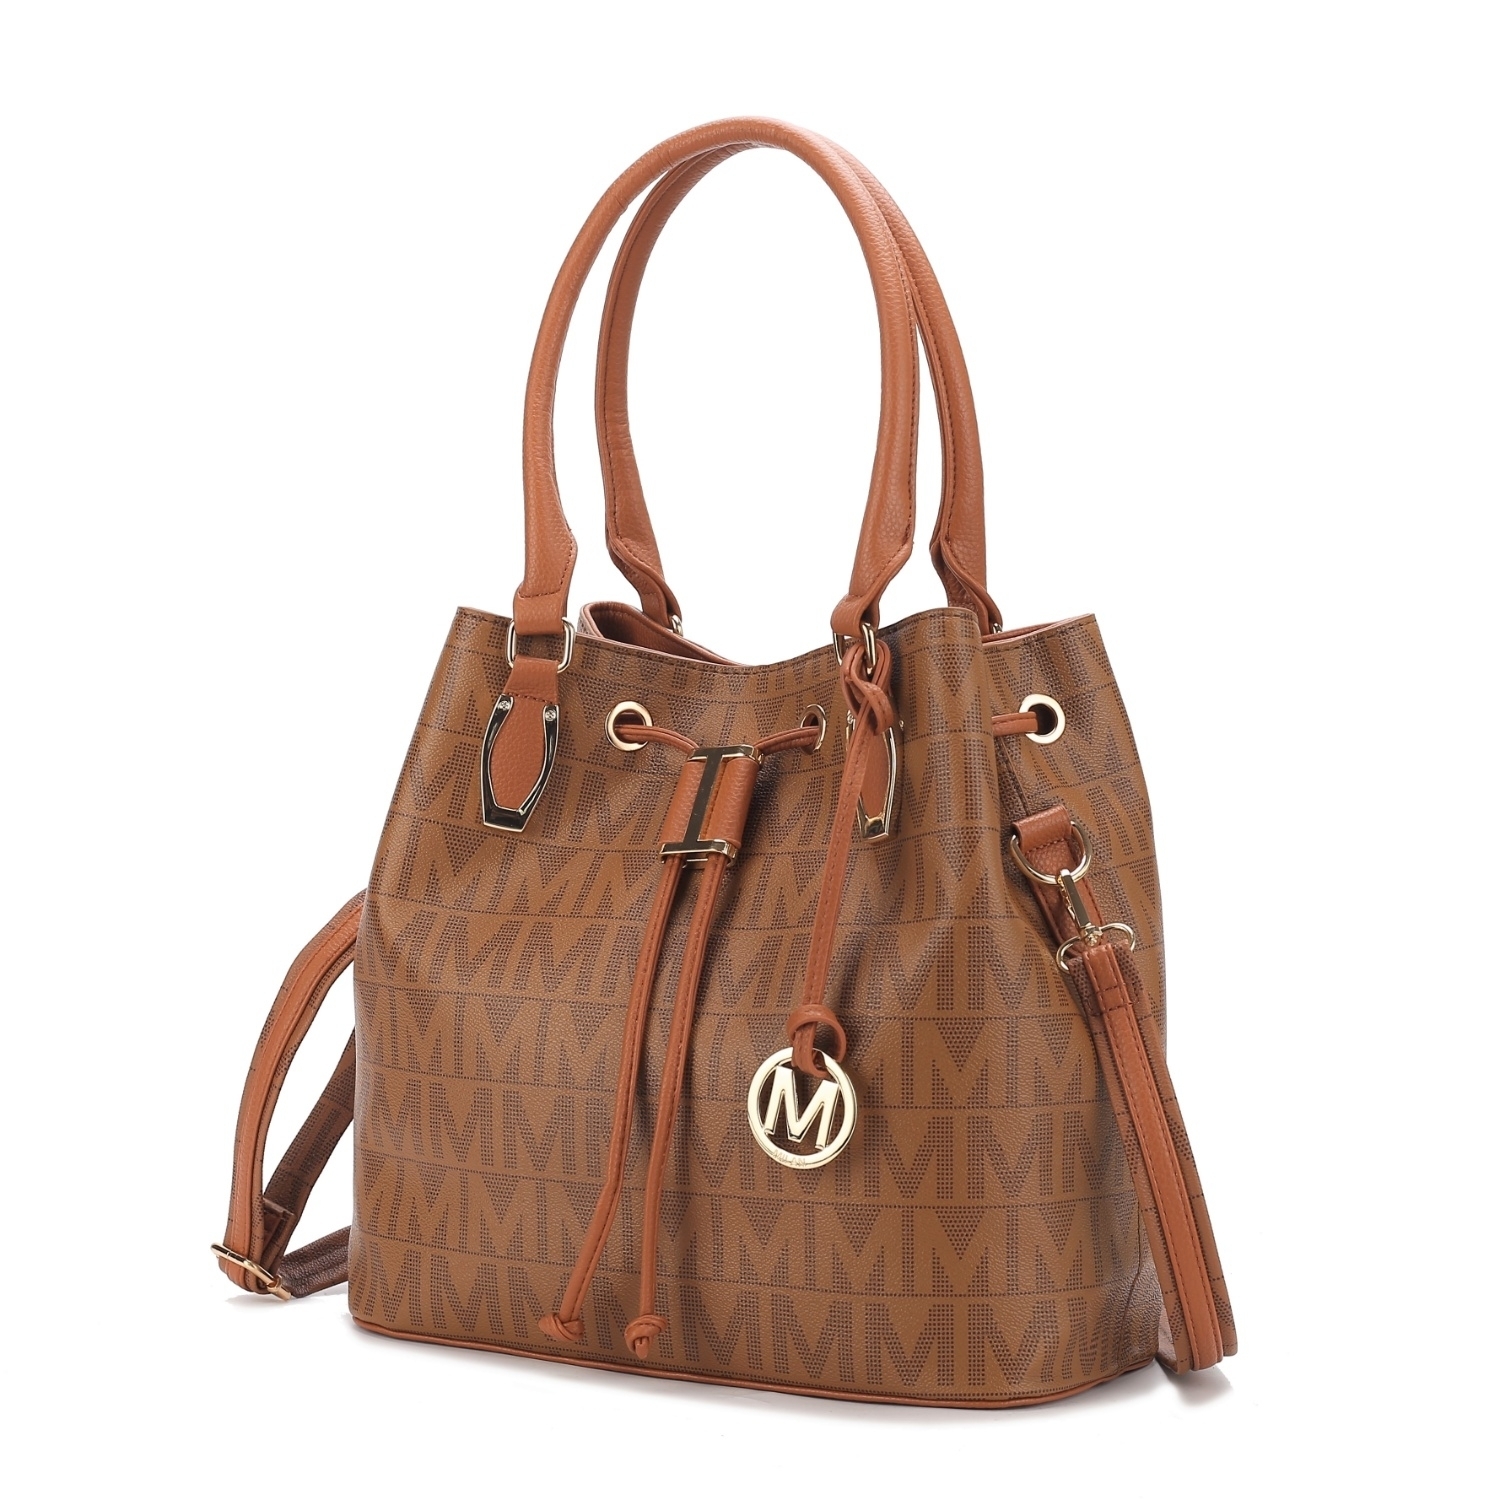 MKF Collection Jane Vegan Leather Tote Handbag By Mia K. - Tan